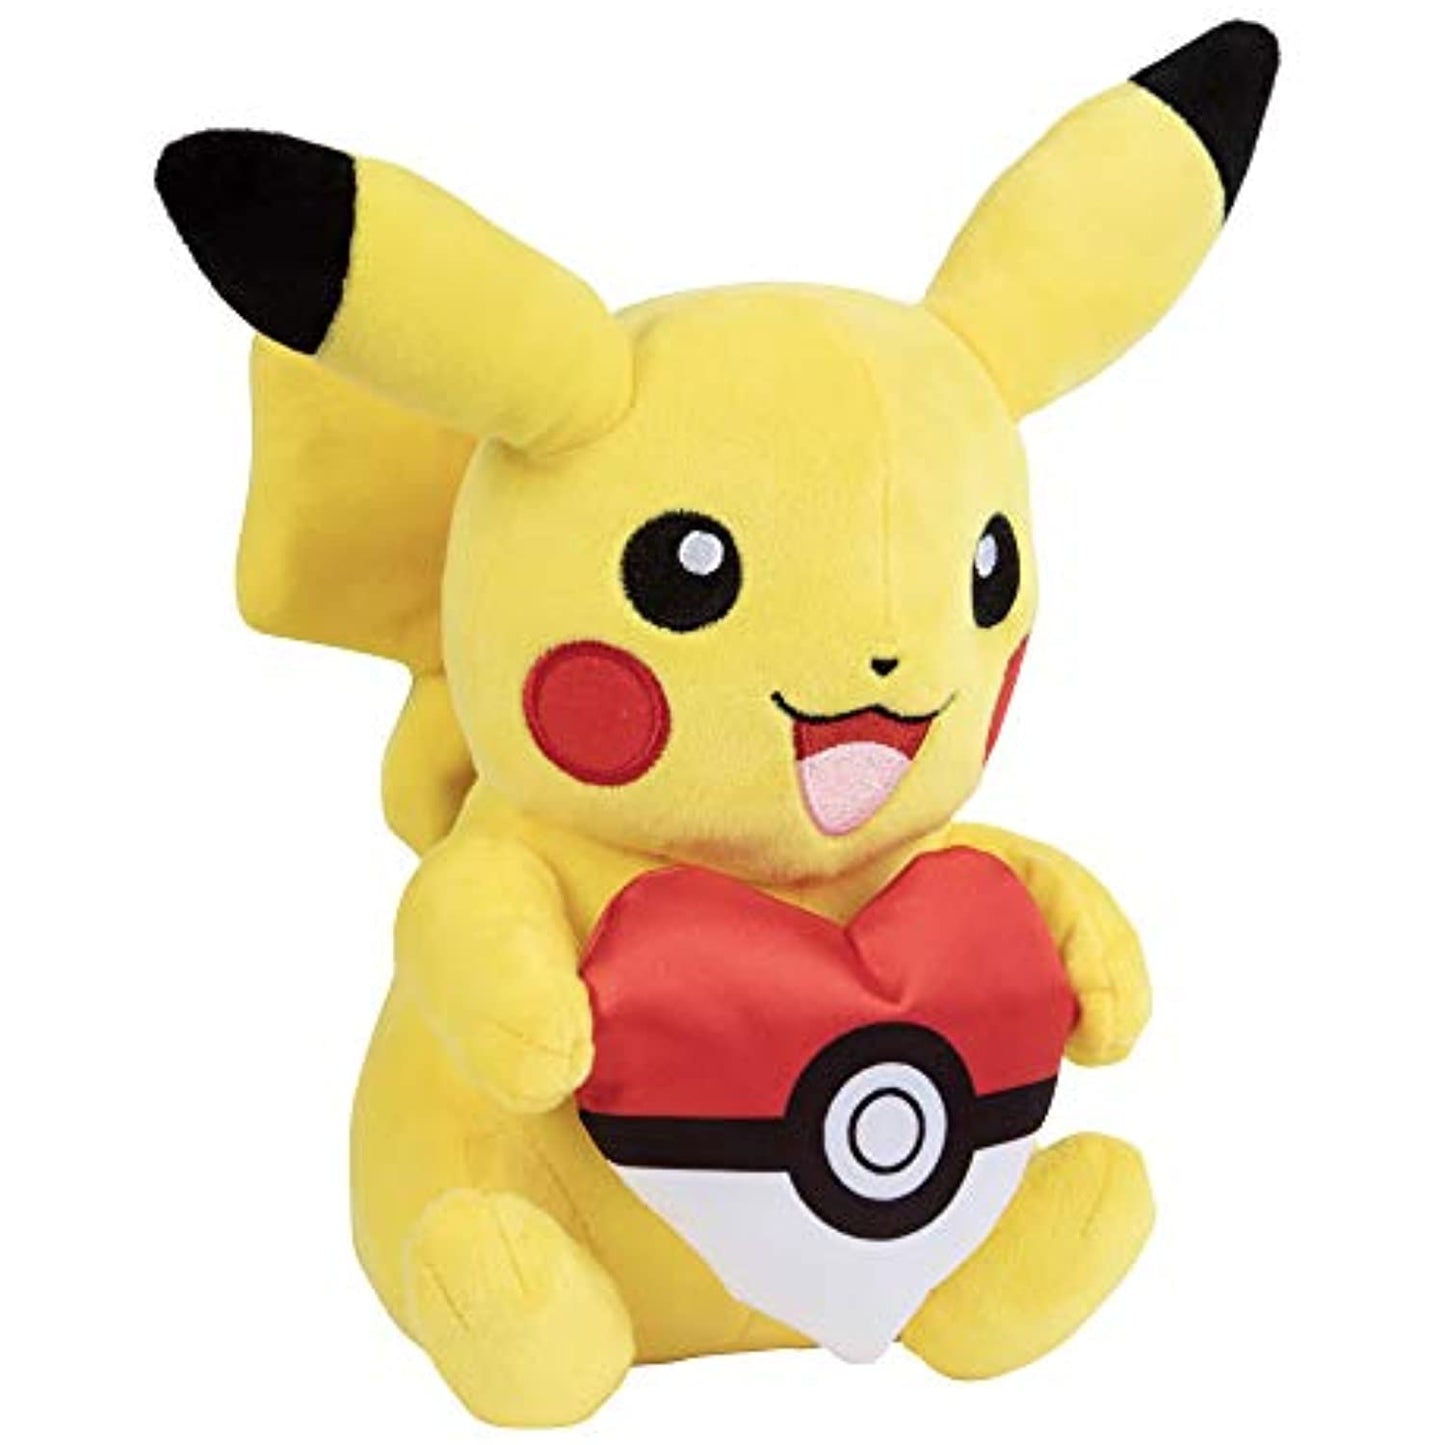 Pokémon Pikachu 8" Plush Stuffed Animal with Heart Poke Ball